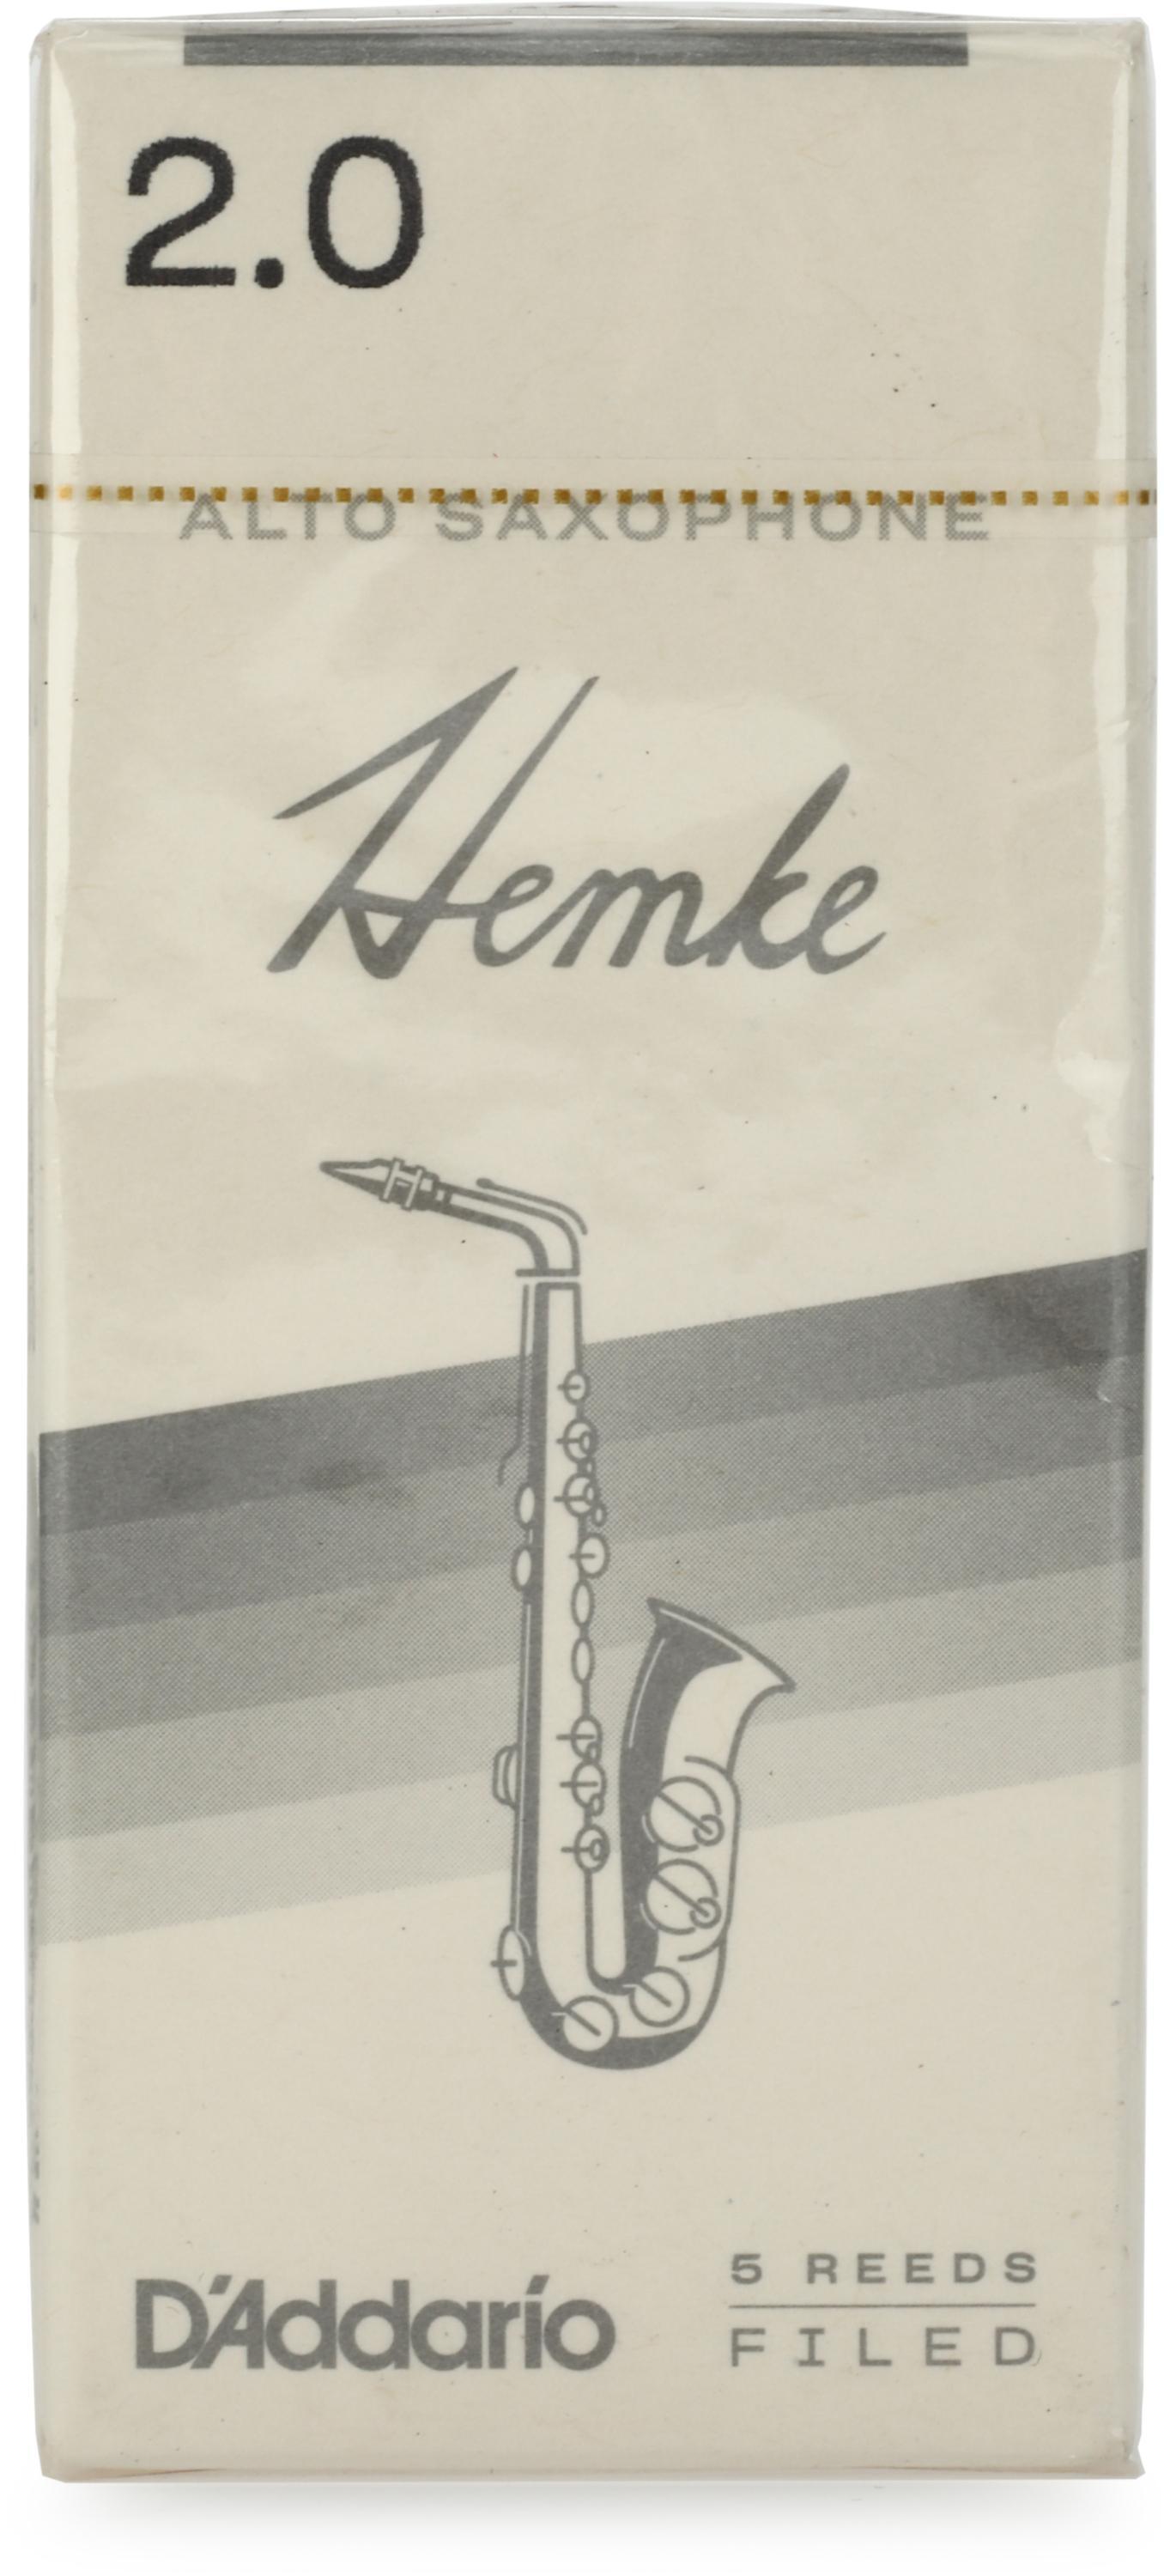 Hemke Alto Sax Reeds by D'Addario